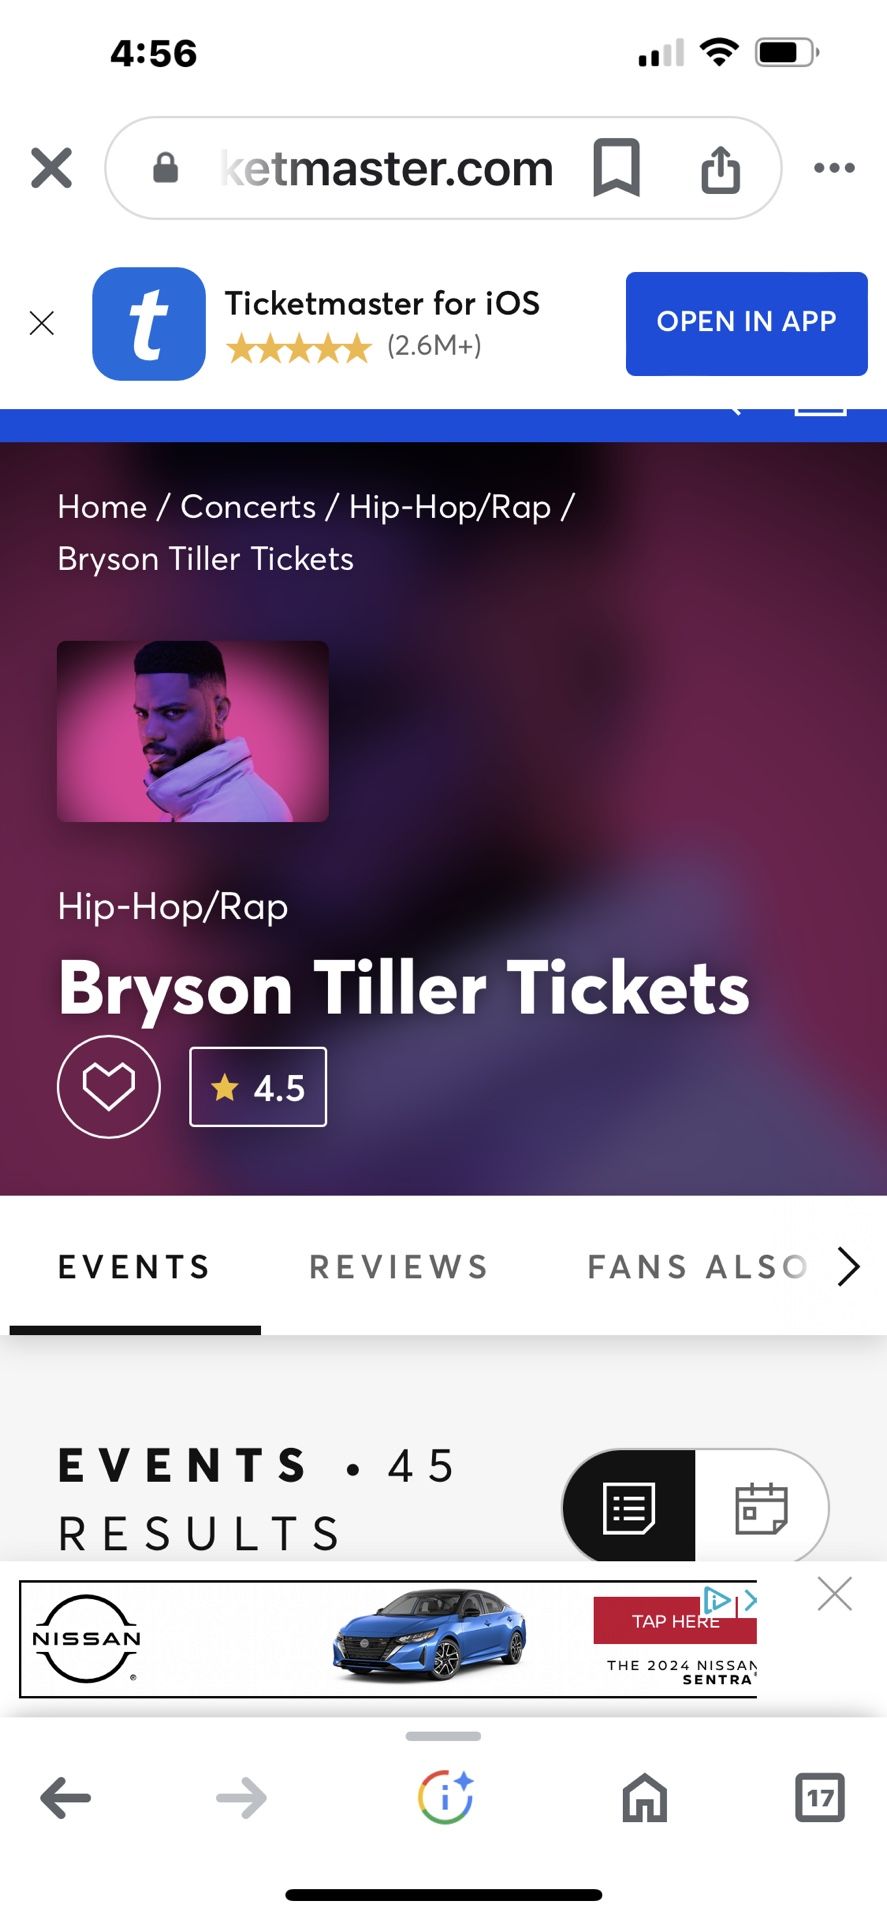 Bryson Tiller Concert Tickets Hollywood June 15